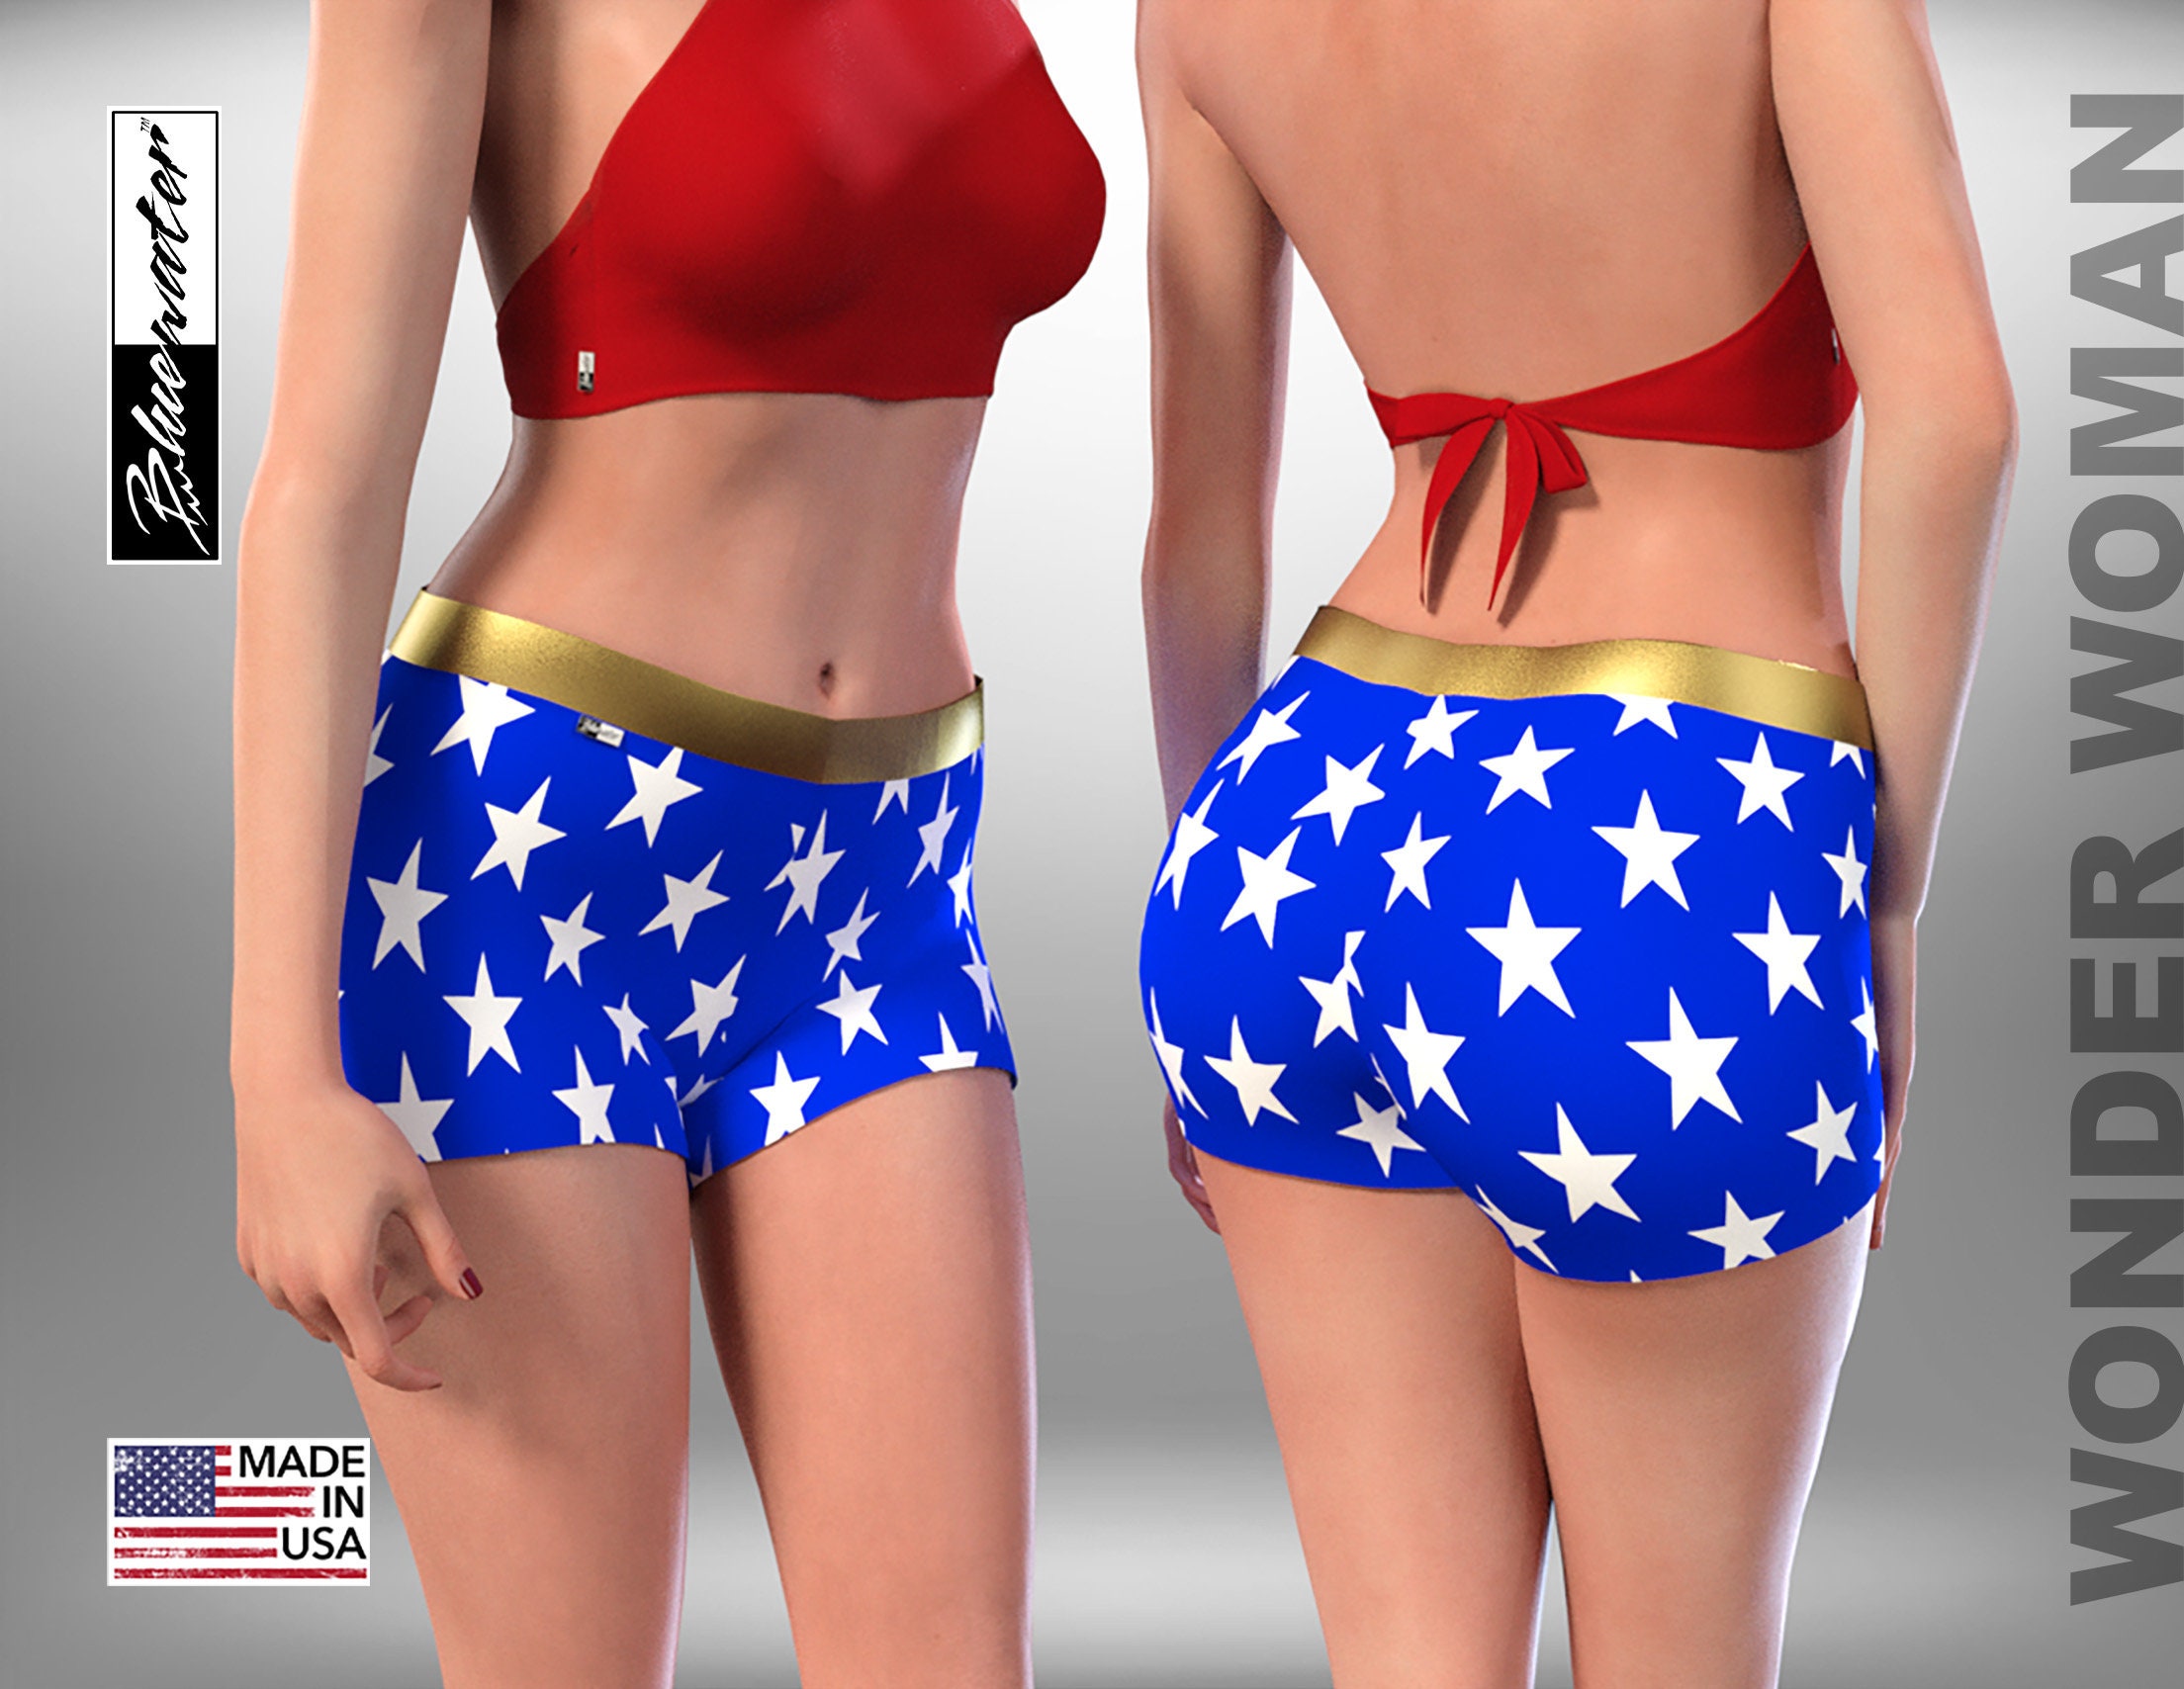 Wonder Woman 112830-s Wonder Woman Symbol Bikini Swimsuit - Small - 2 Piece  